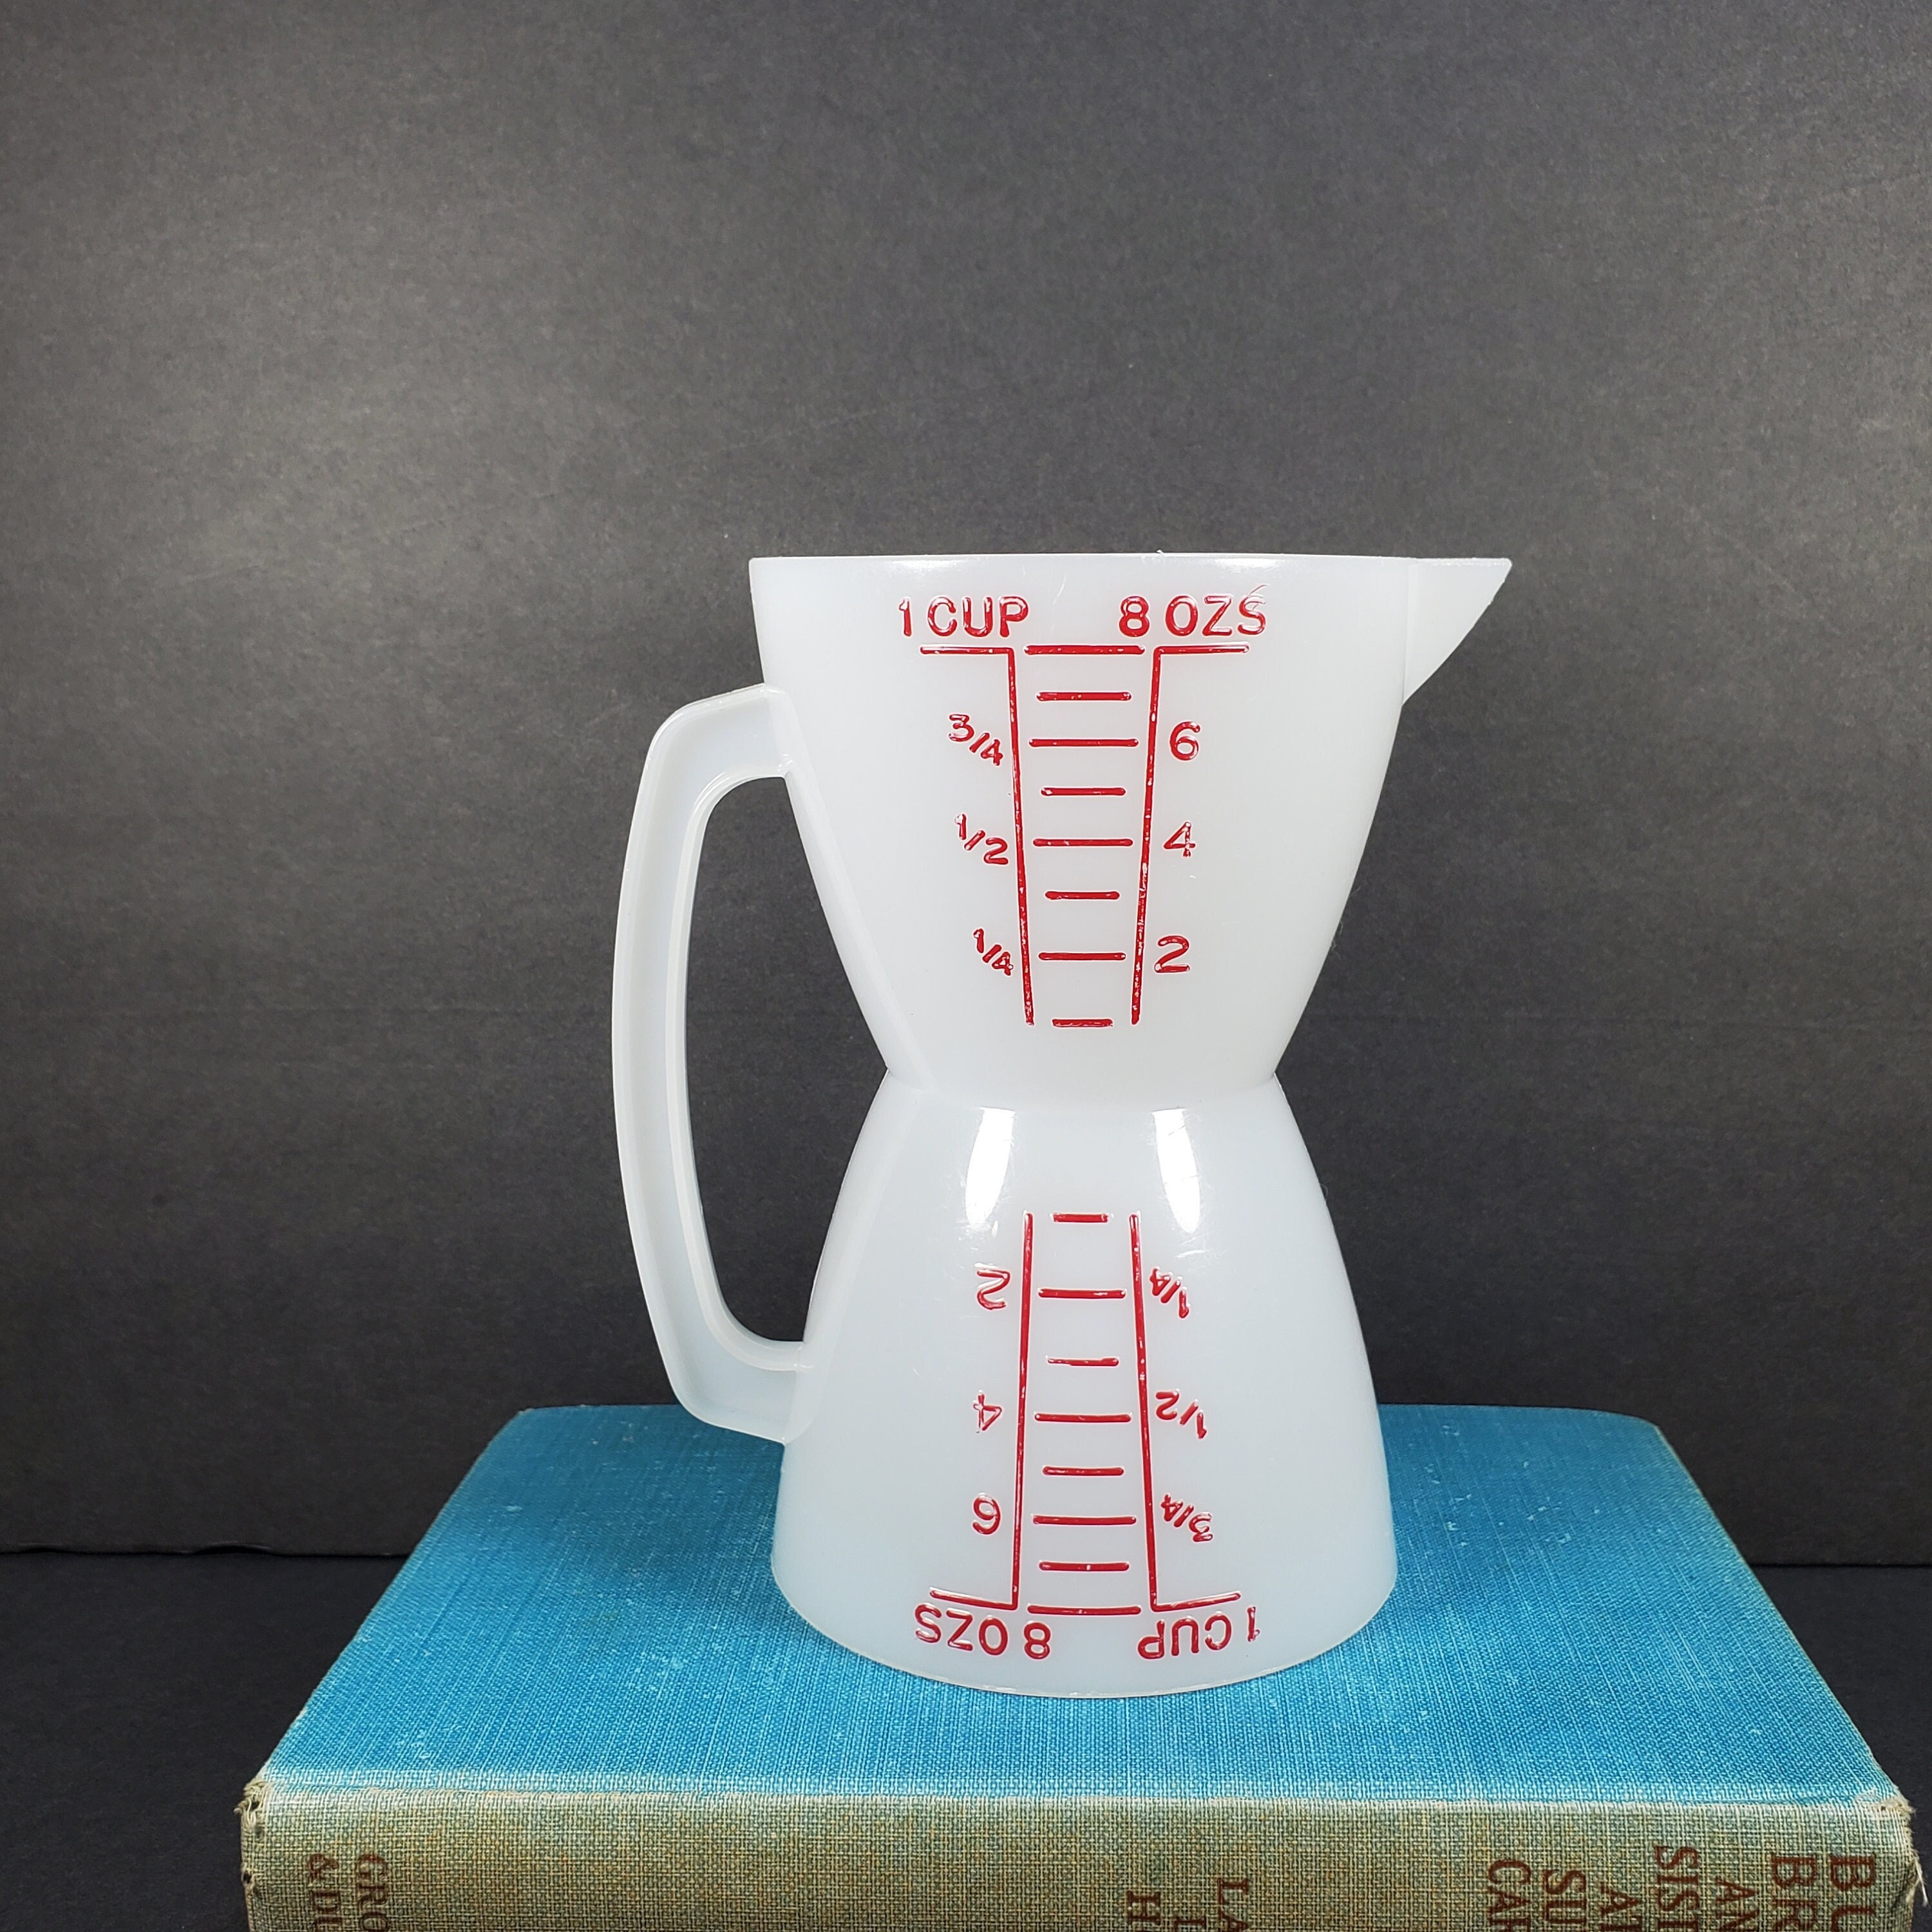 Measuring Cup, Food Grade Silicone Measuring Cups, Visual Dual